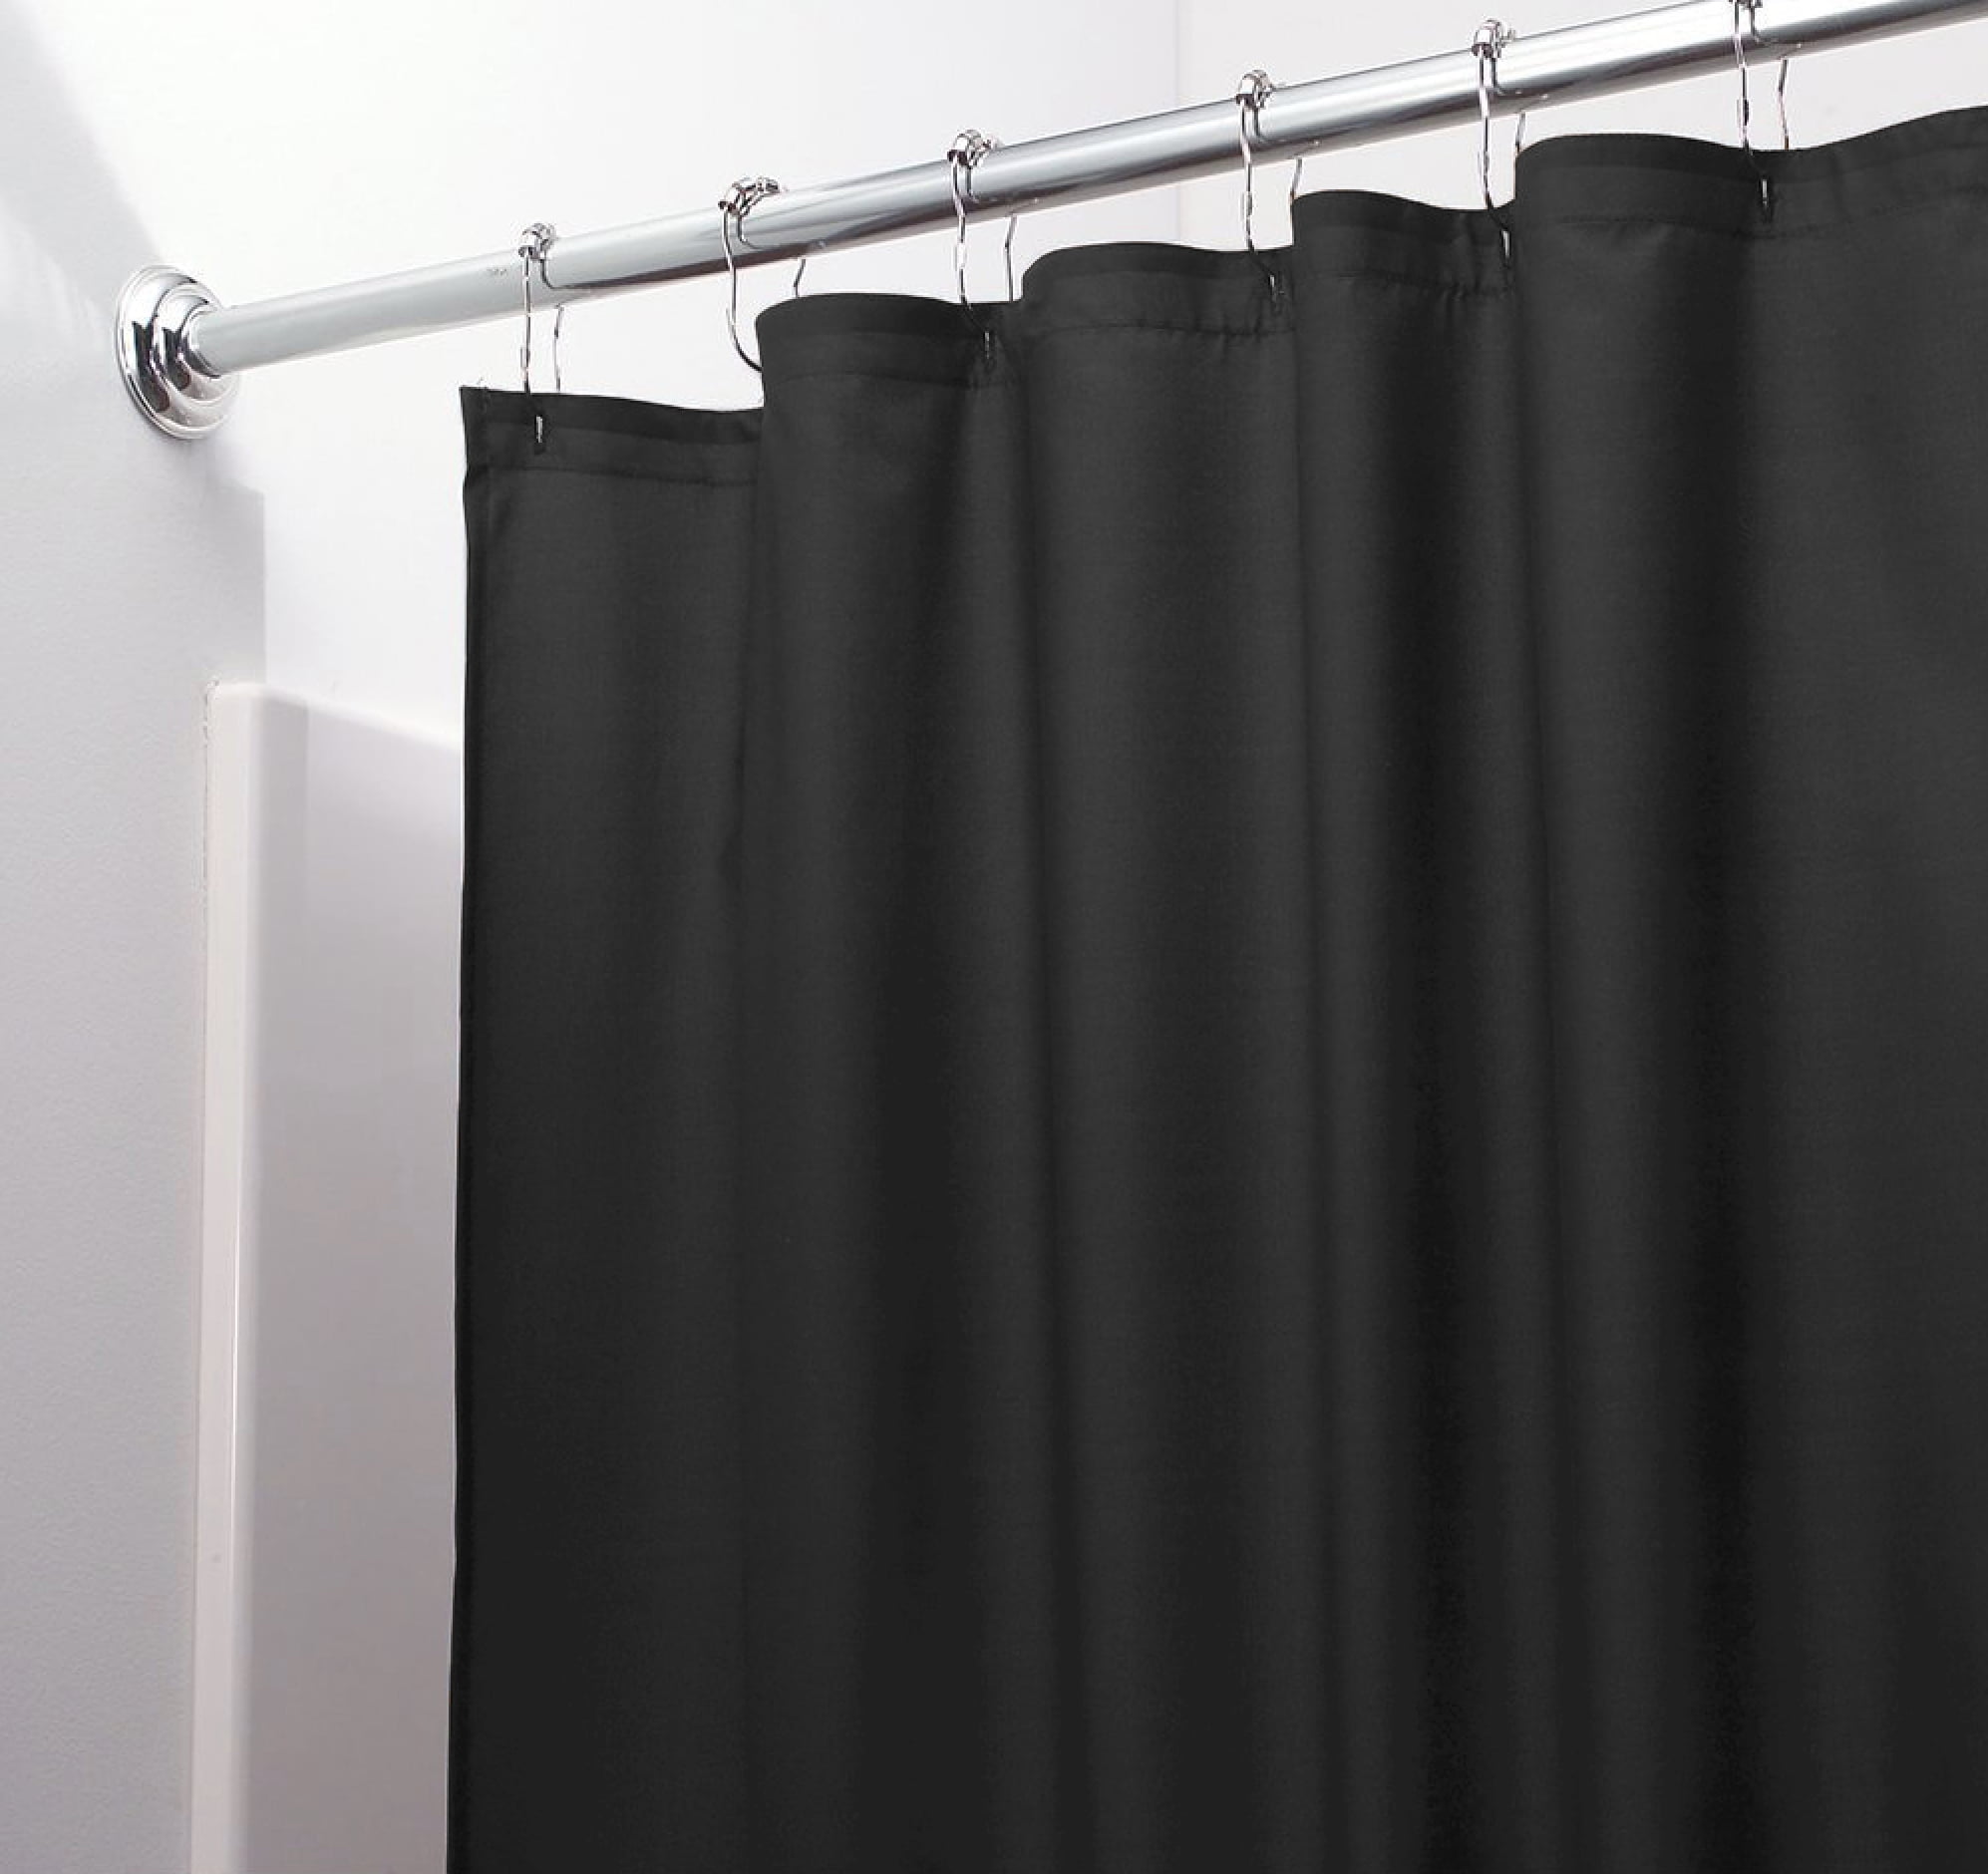 Mold Mildew Resistant Fabric Shower, Best Waterproof Fabric Shower Curtain Liner